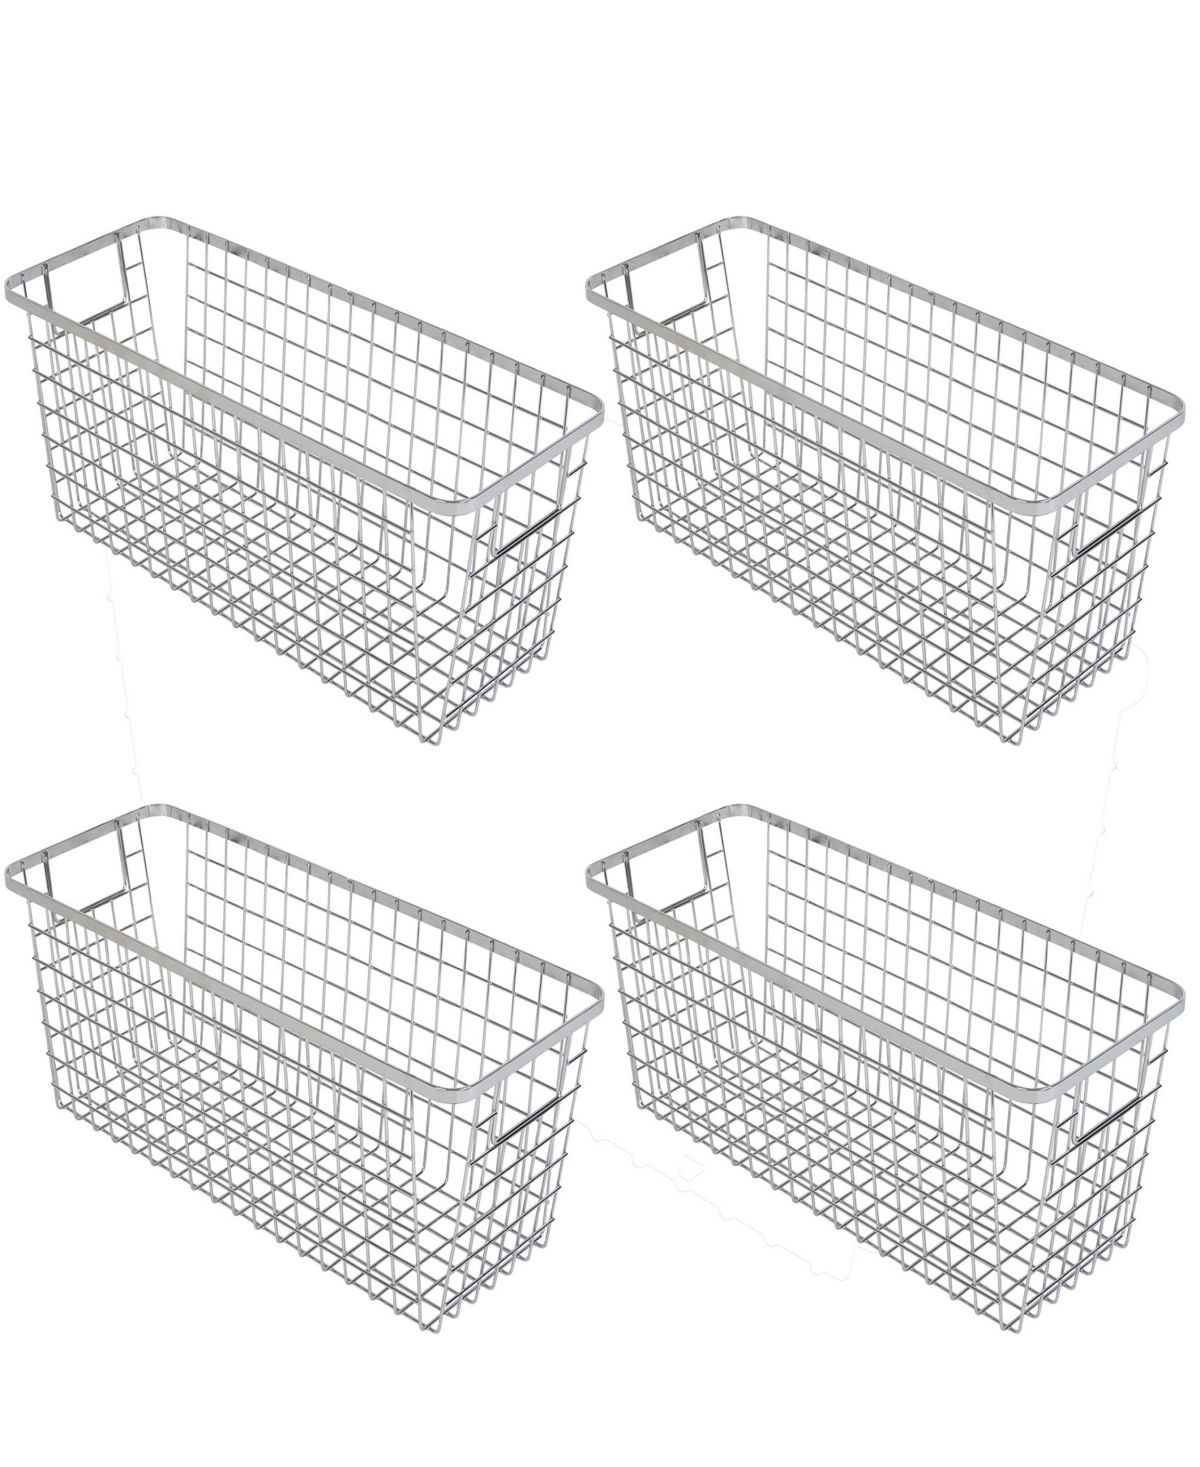 Nestable 6" x 16" x 6" Basket Organizer with Handles, Set of 4 - Chrome